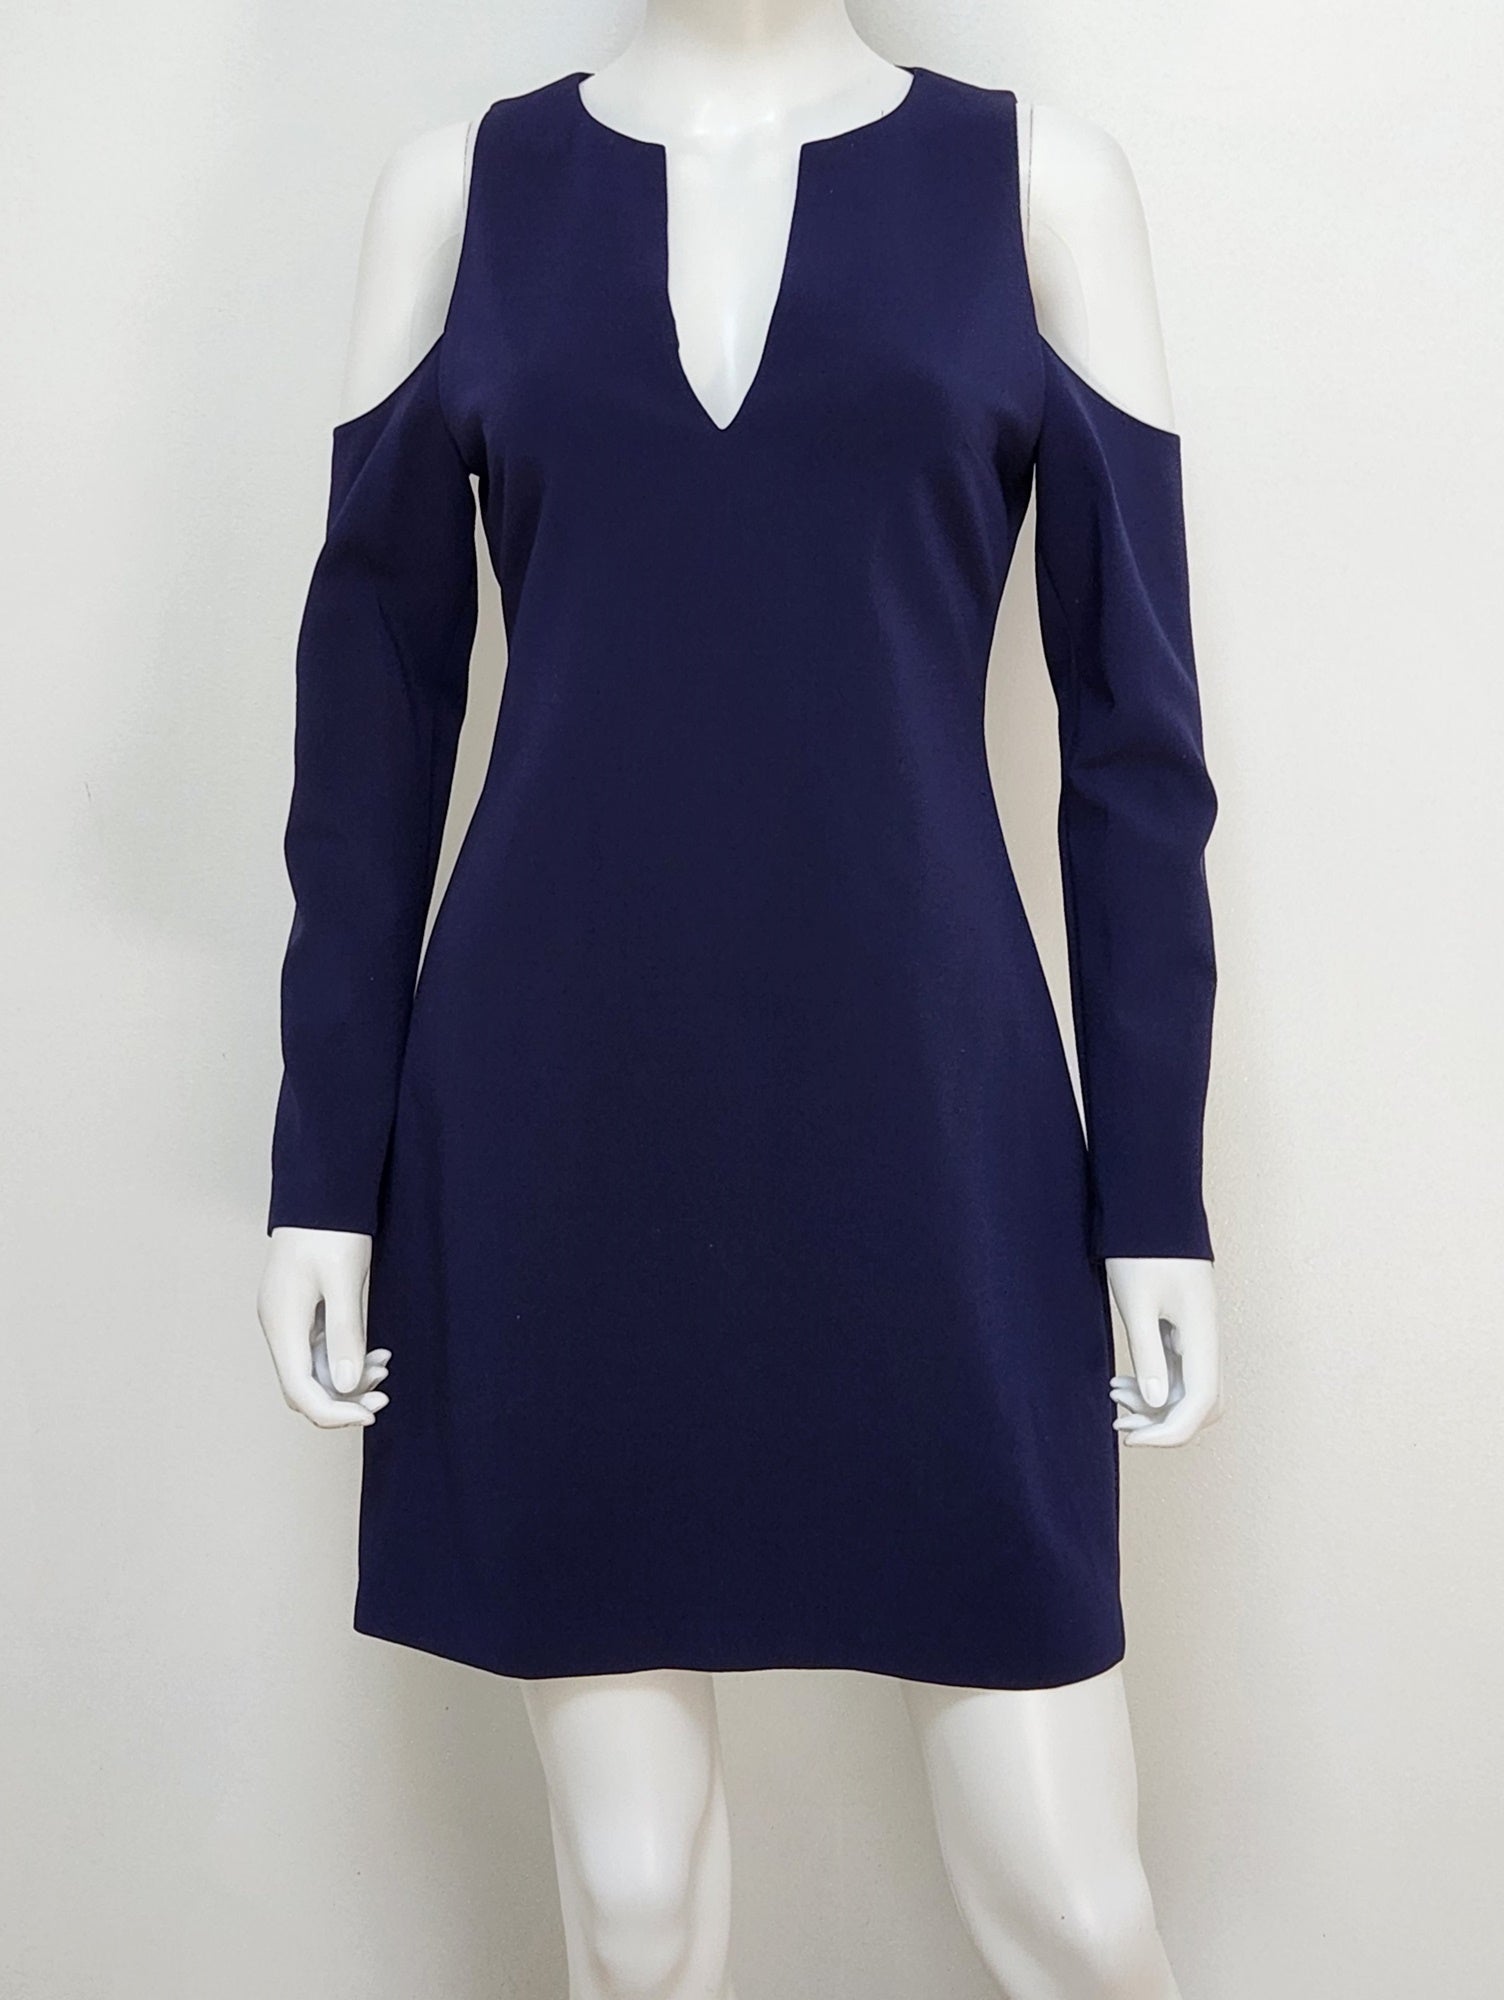 Nico Cold Shoulder Sheath Dress Size 8 NWT